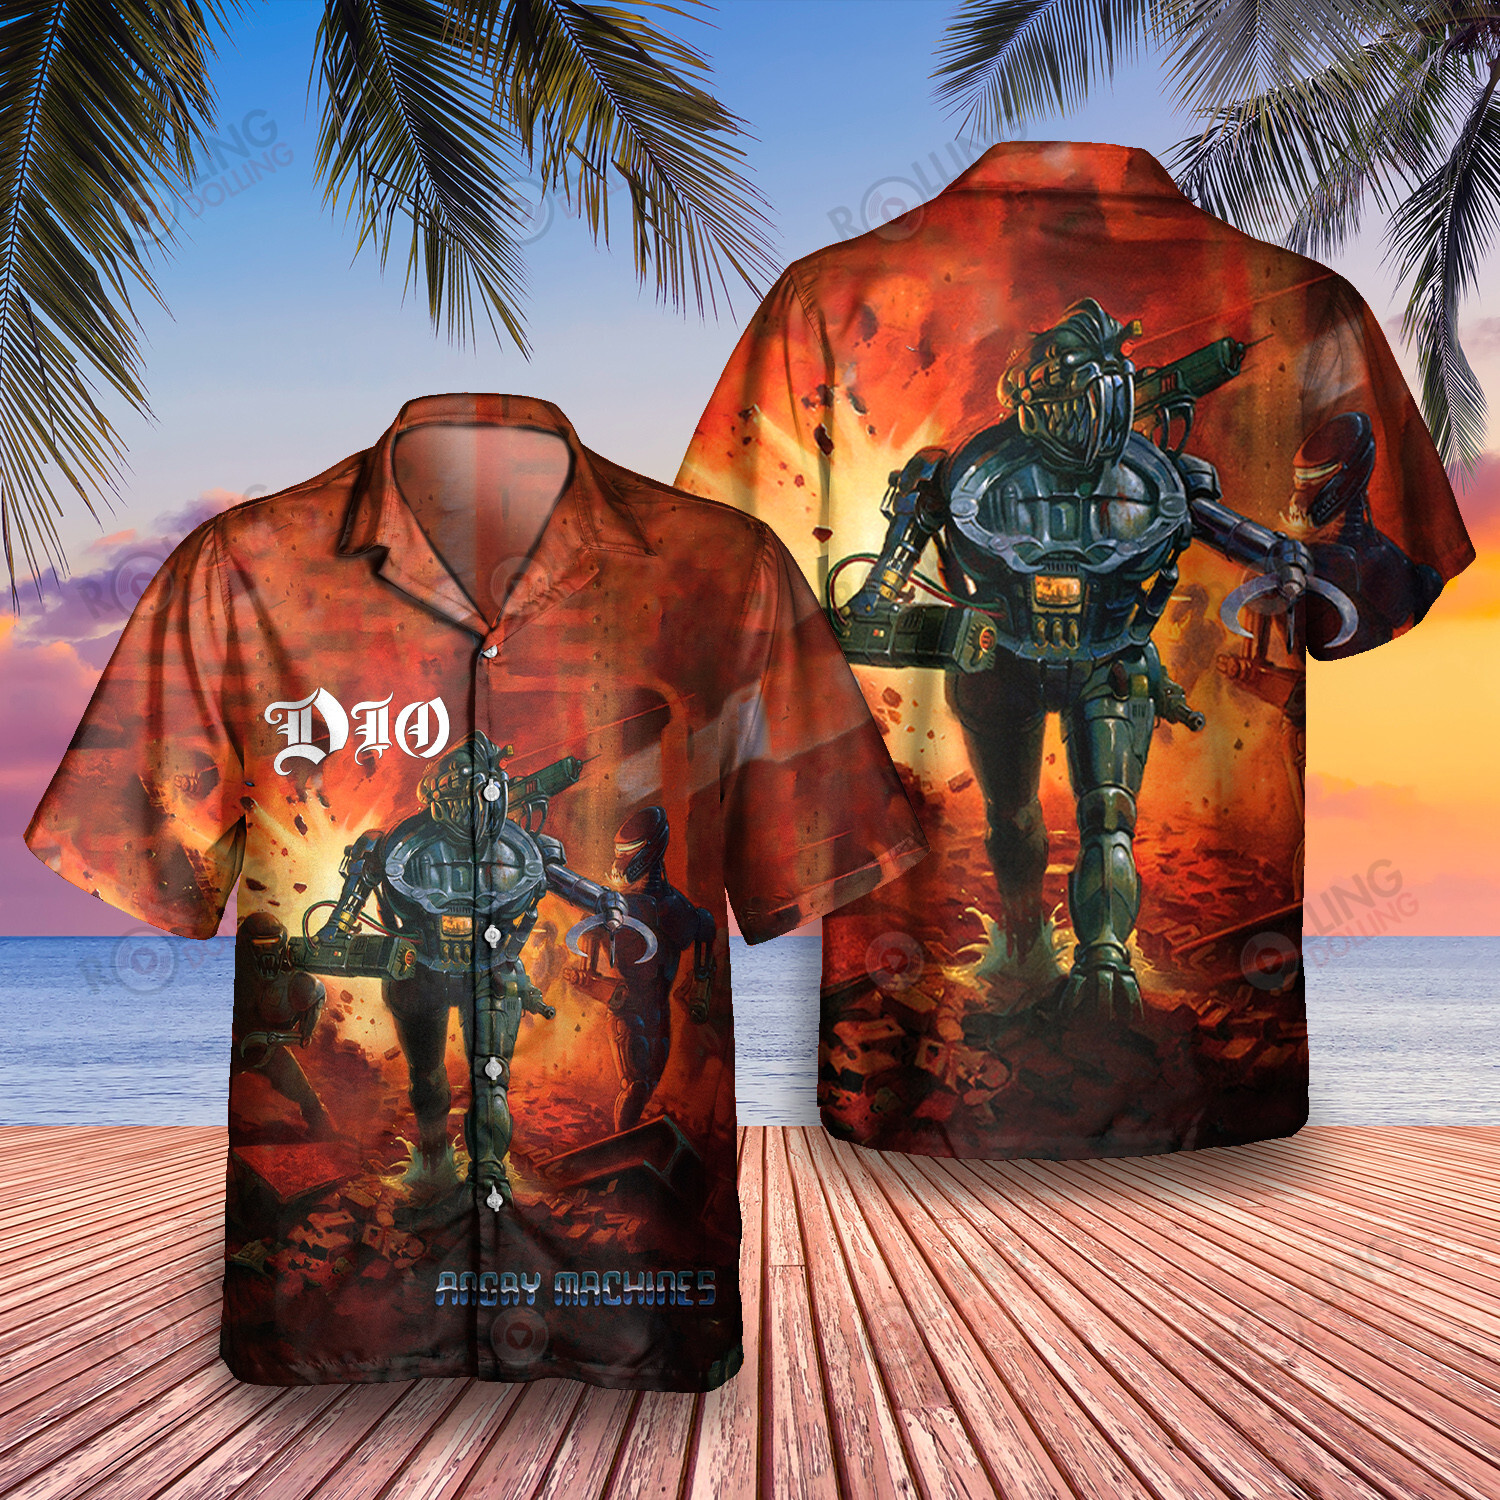 HOT Dio Angry Machines Album Tropical Shirt1